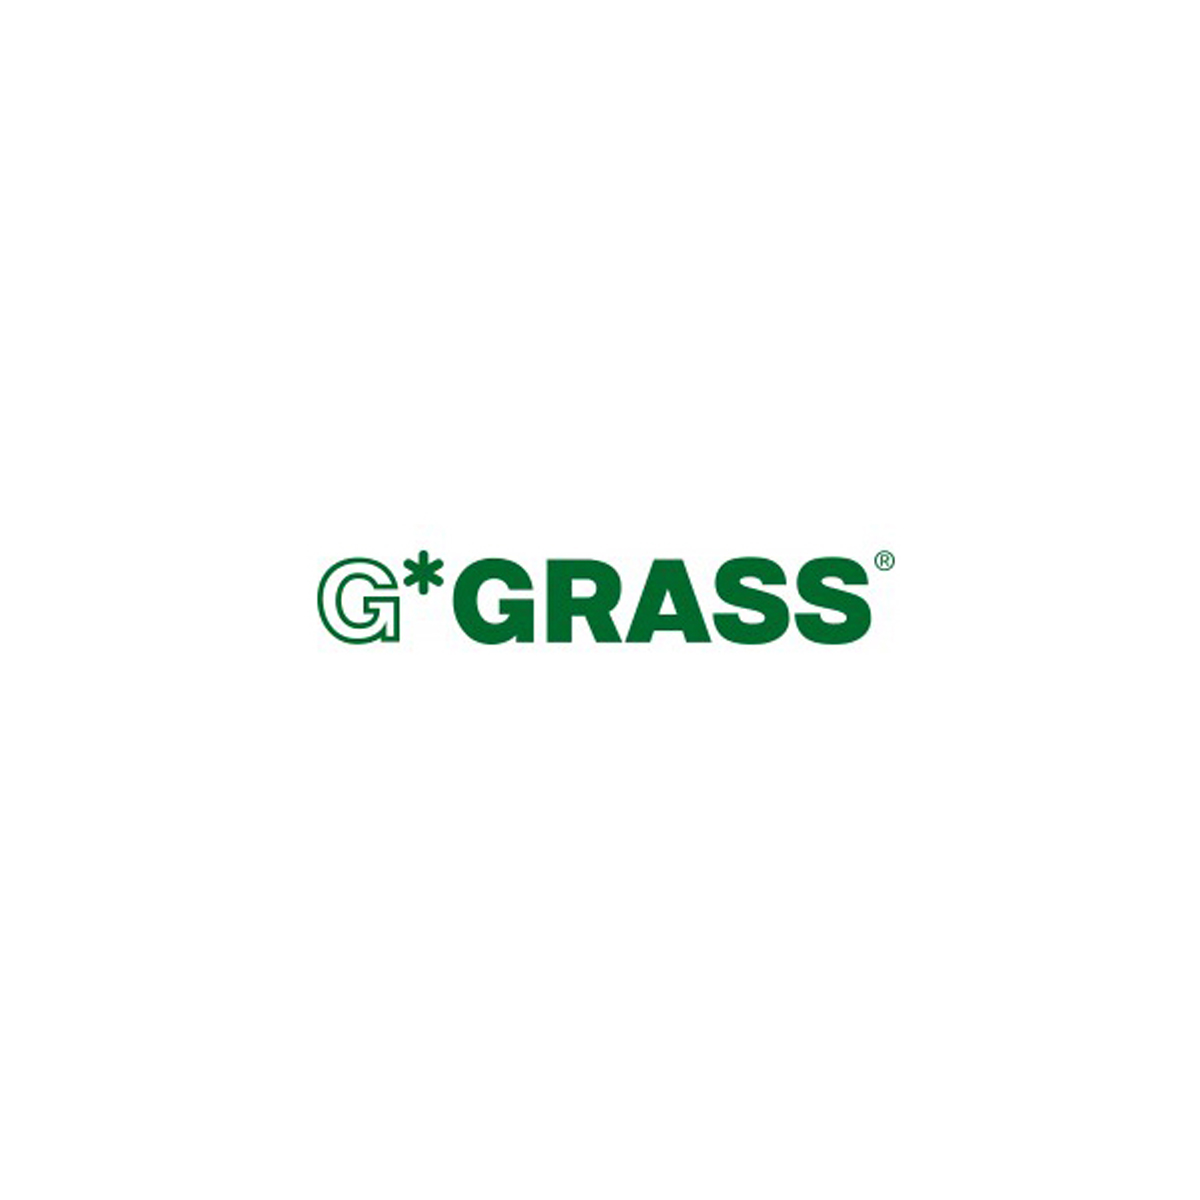 Граас. Grass фурнитура лого. Логотип фирмы Грасс. Грасс Волгоград логотип. Грасс химия логотип.